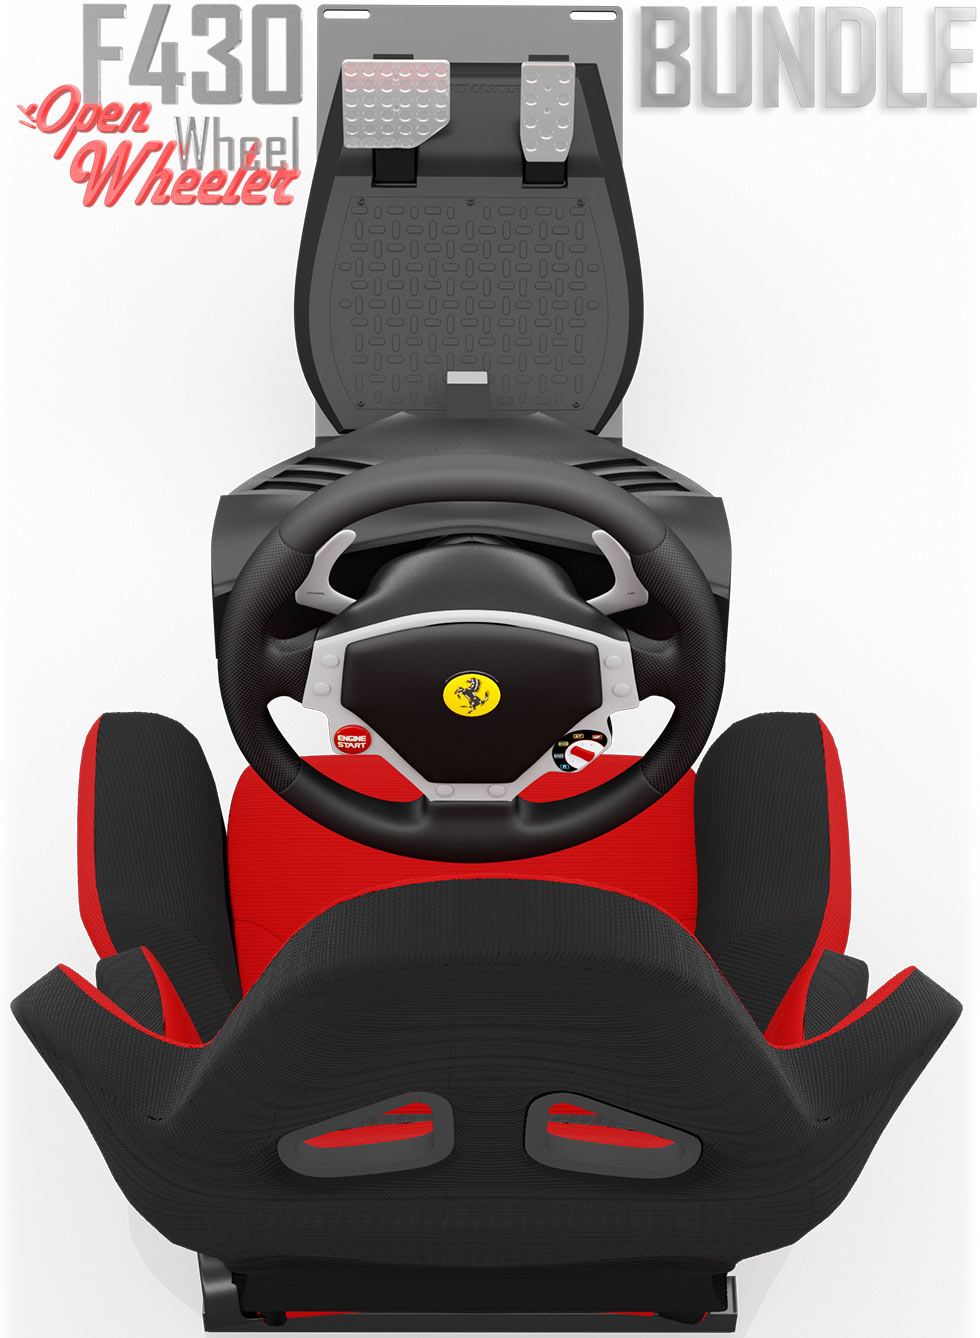 Ferrari F430 Racing Wheel + OW Game Seat In Bundle